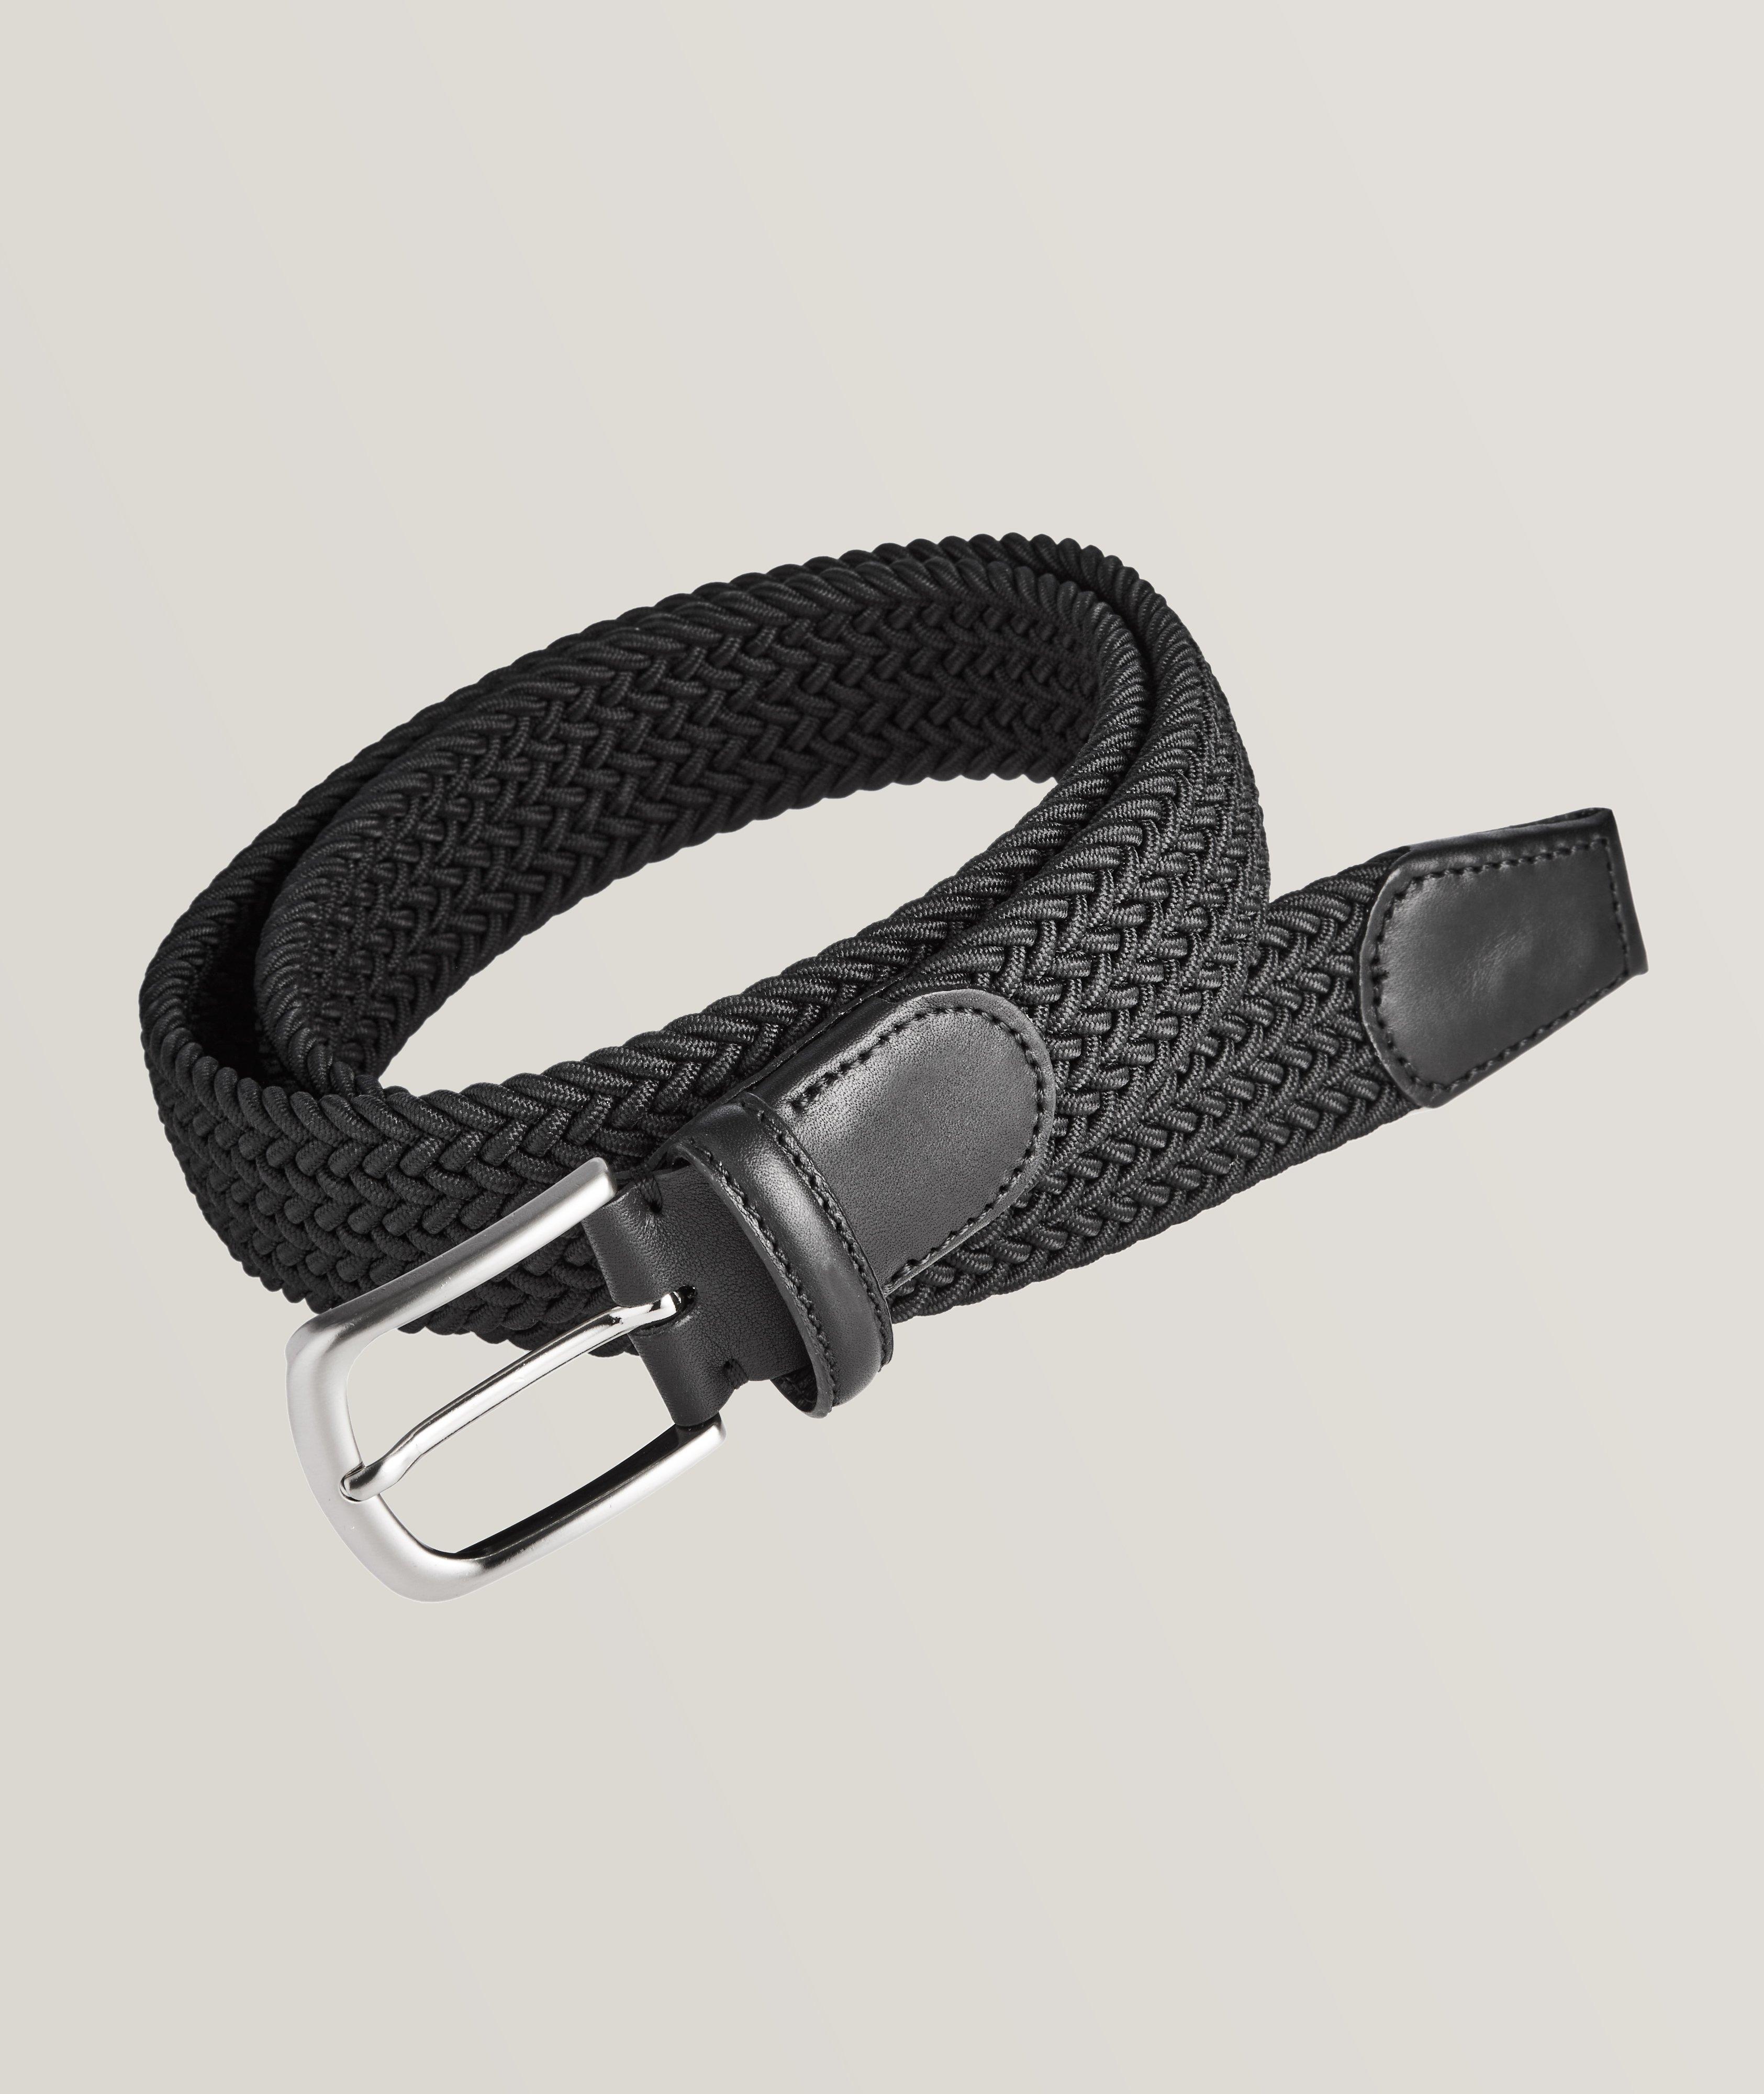 Men's Brighton Ventura Leather Belt, #M10383 Black - Richard David for Men